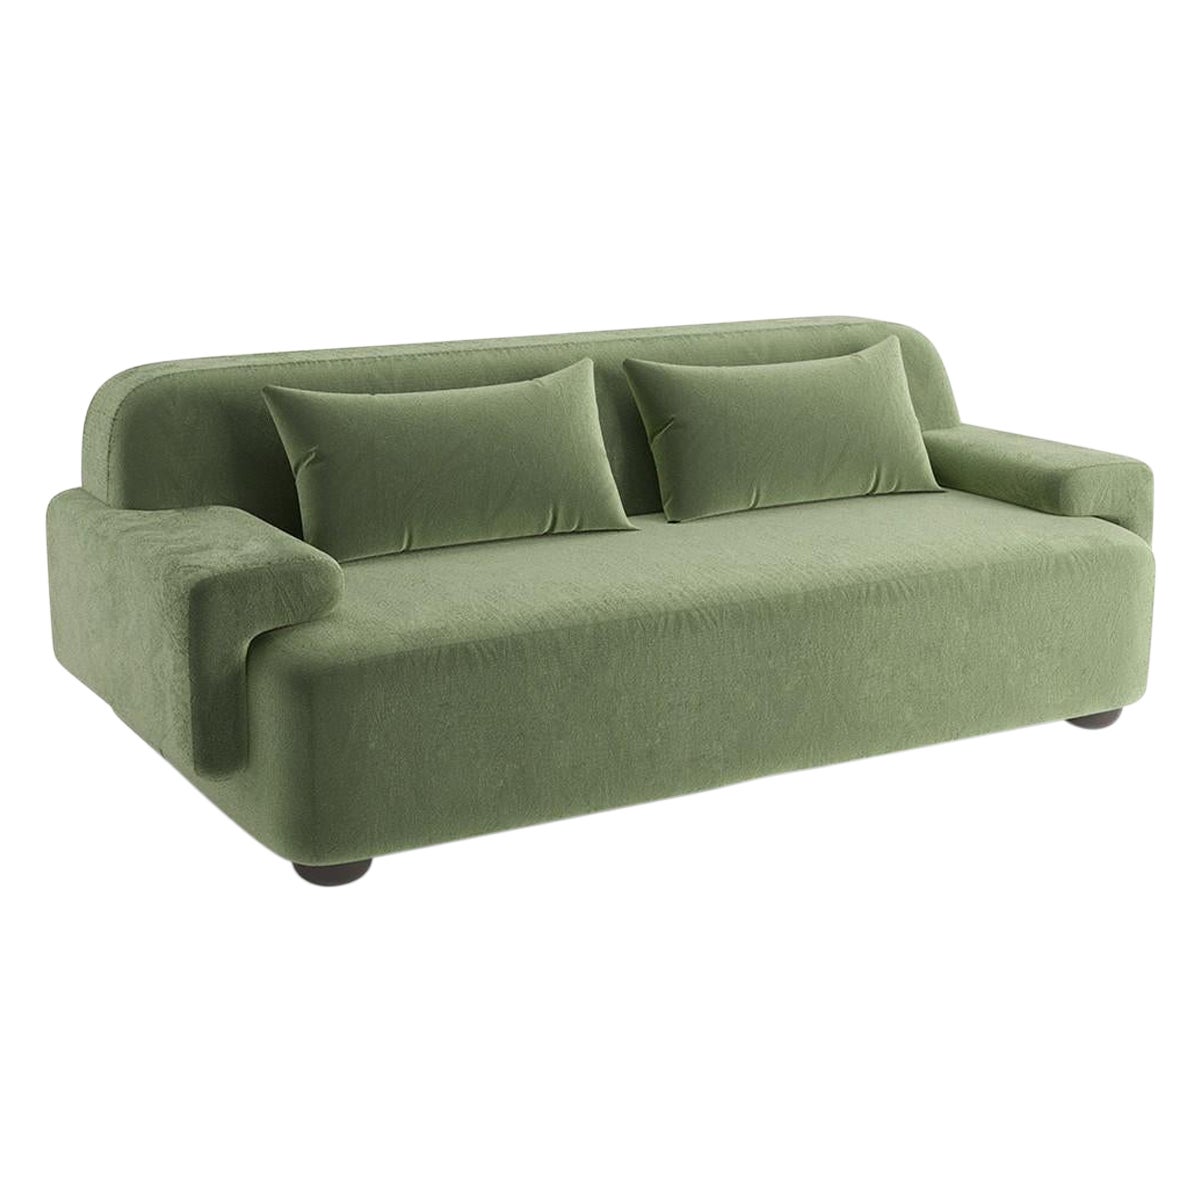 Popus Editions Lena 2.5 Seater Sofa in Green Verone Velvet Upholstery